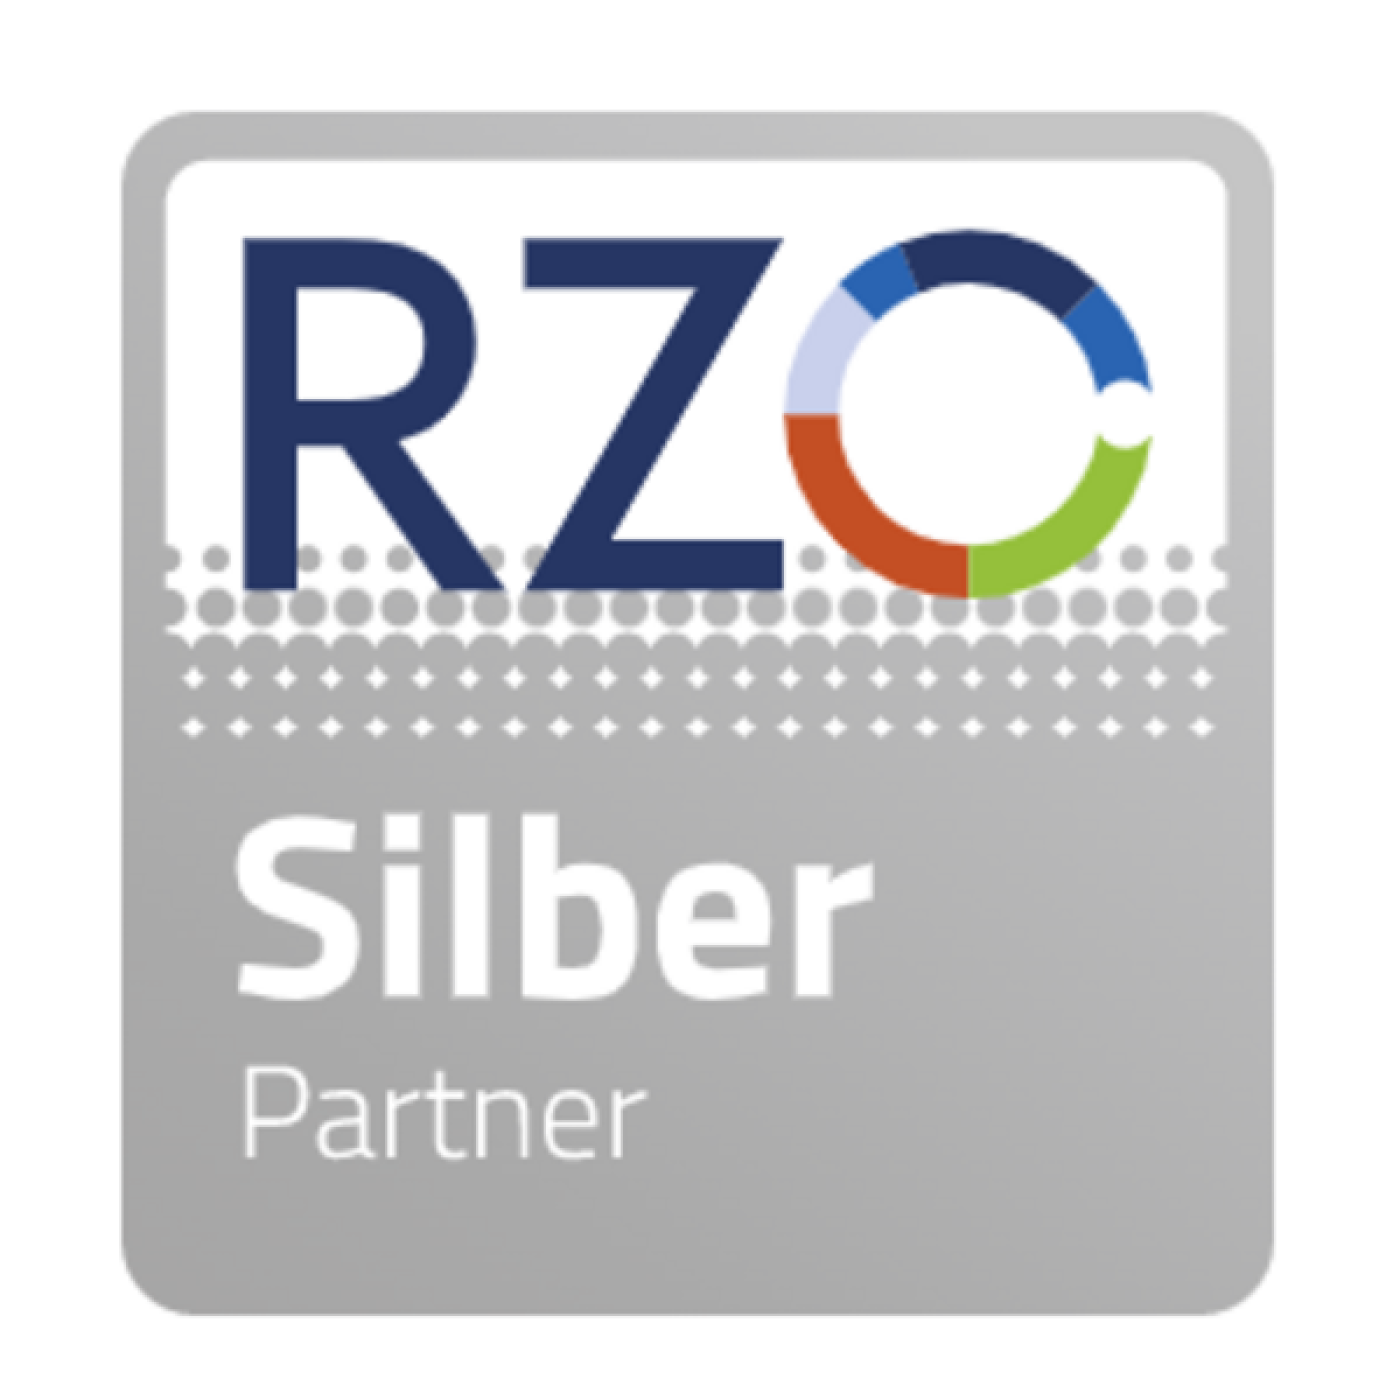 RZO_Silverpartner